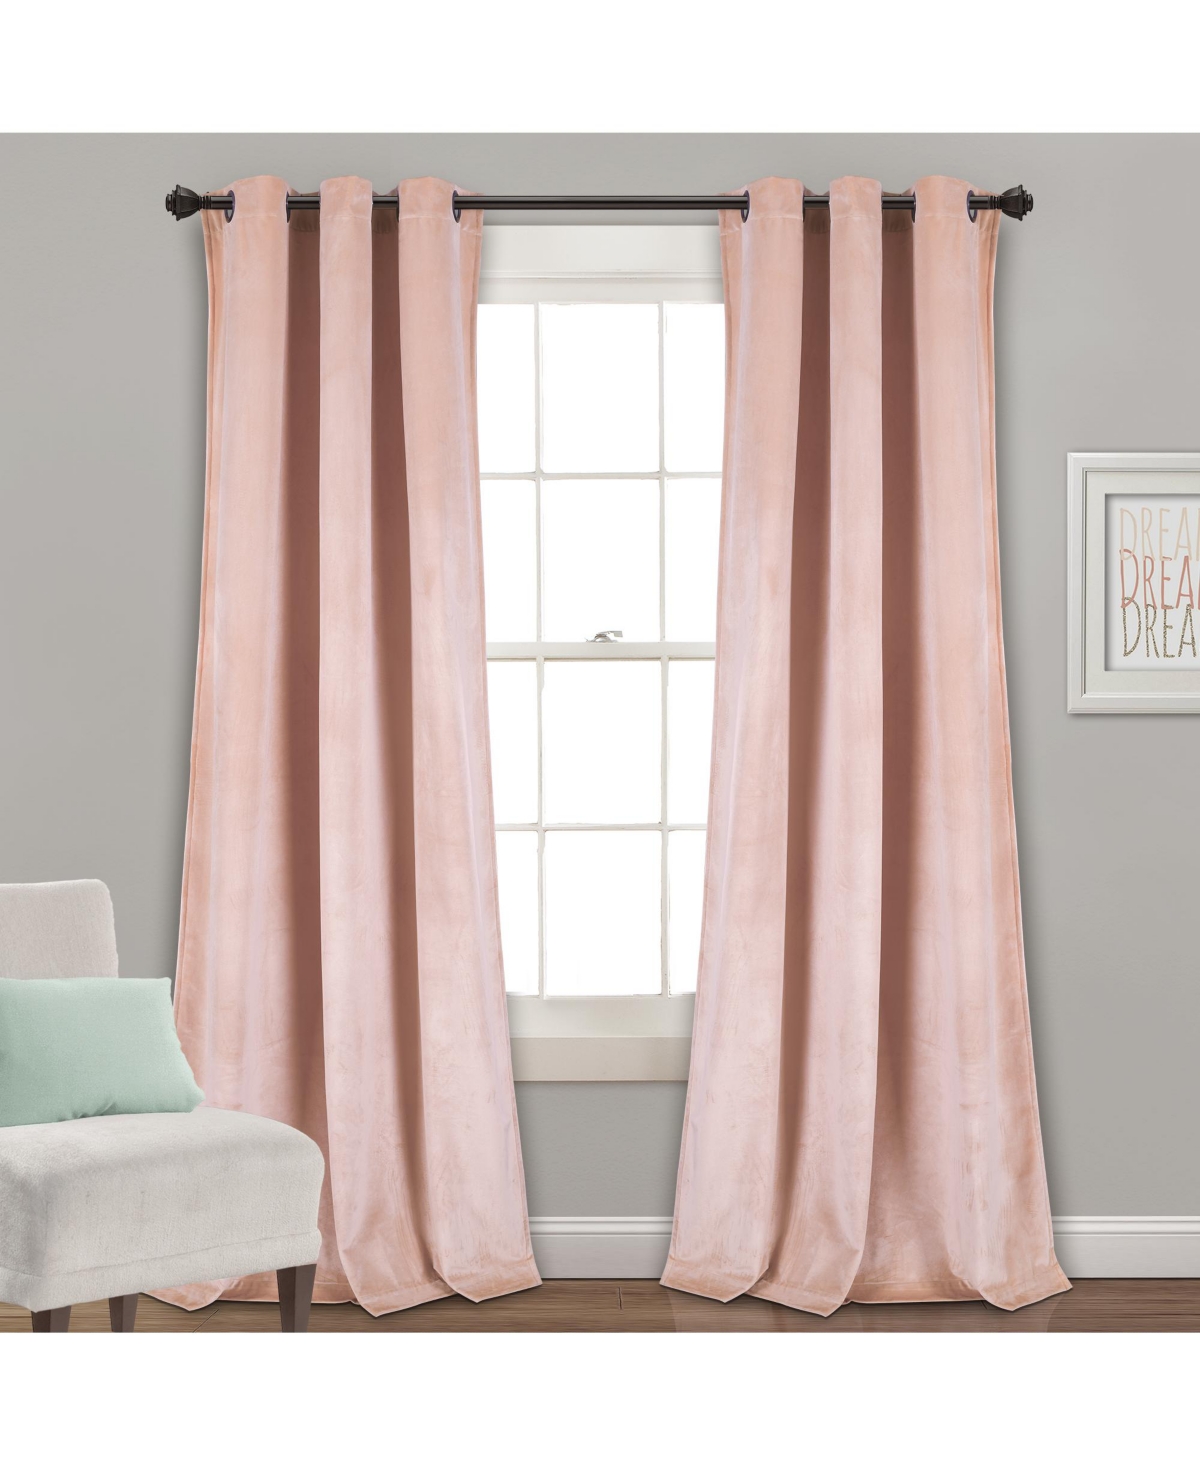 Prima Velvet Solid Light Filtering Window Curtain Panels - Blush